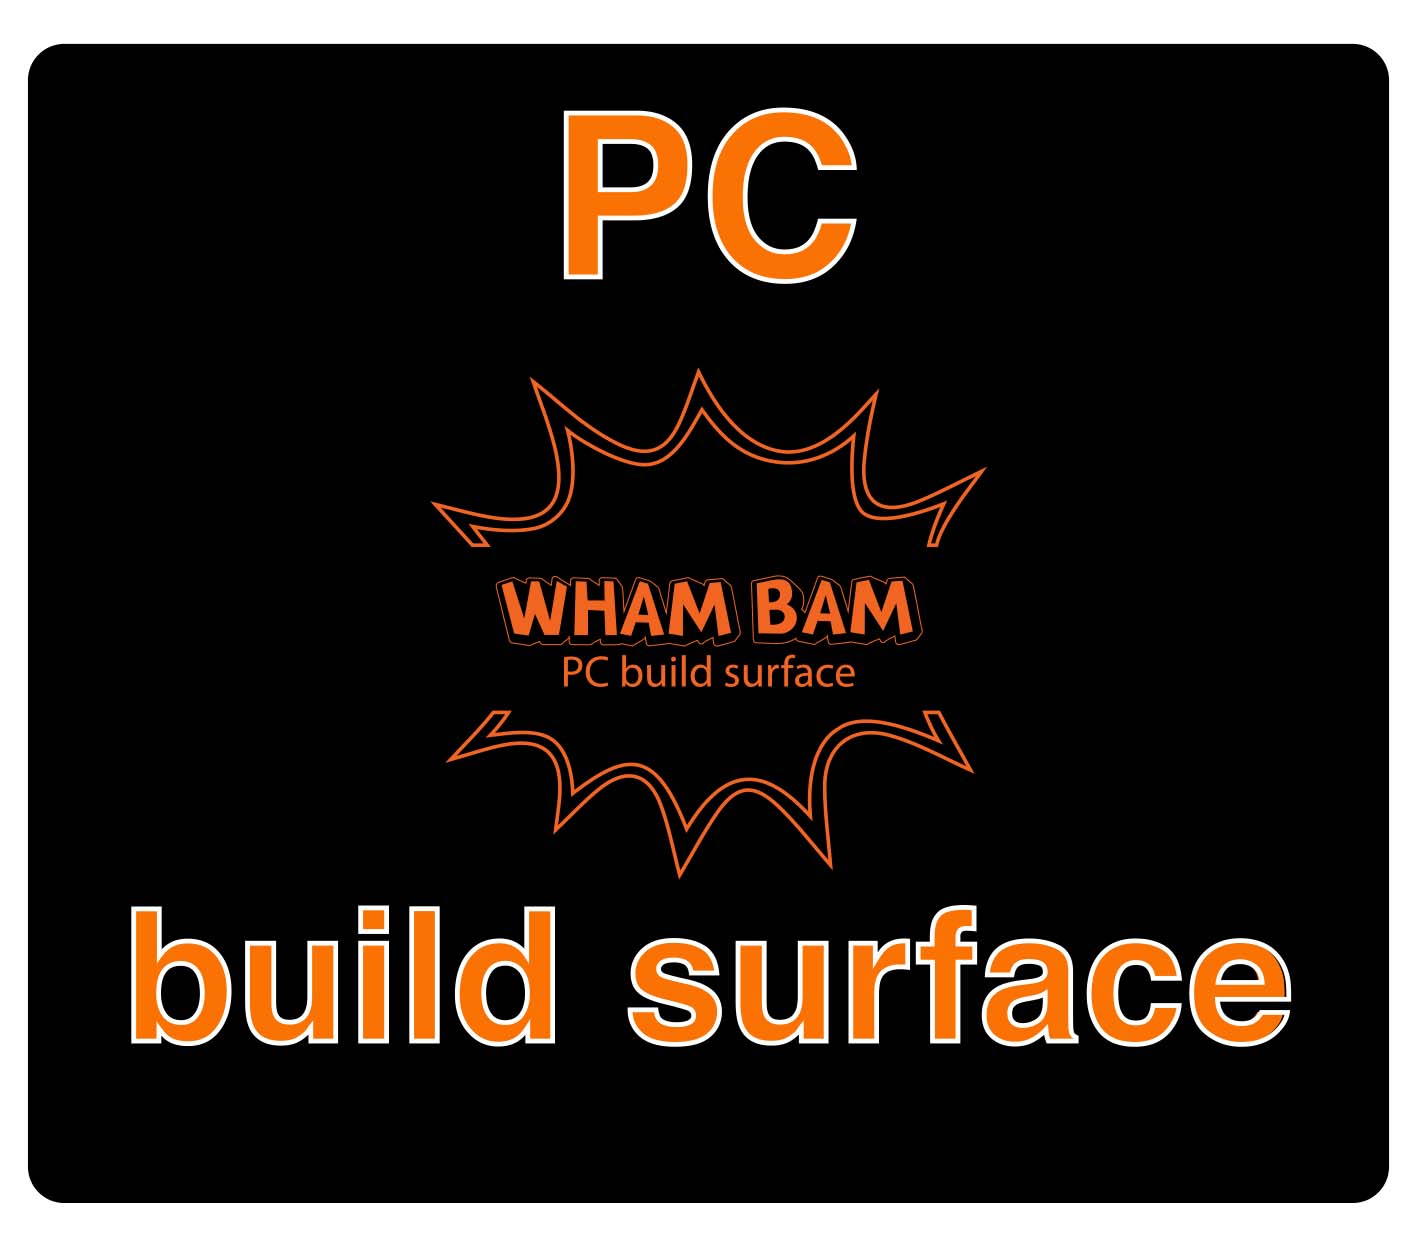 PC Build Surface (Classic Black) - 254 x 235 - Prusa i3 MK3/S/+, Raise3D N1, MatterHackers Pulse